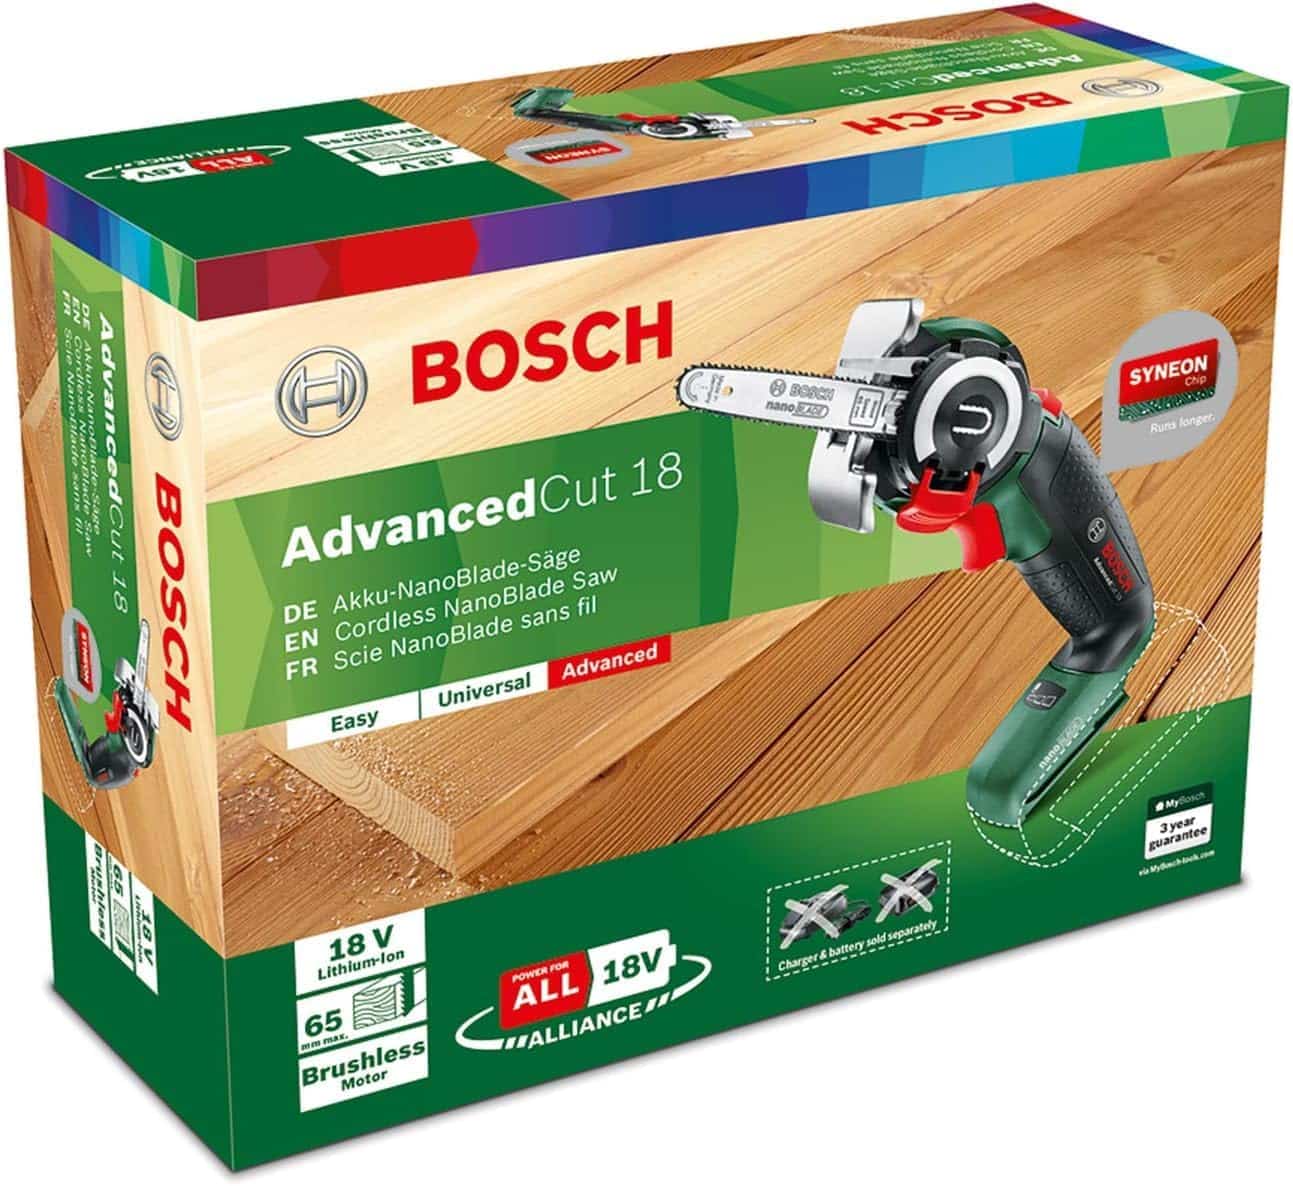 Bosch Home and Garden Cordless Saw AdvancedCut 18 LI Bare unit 2014